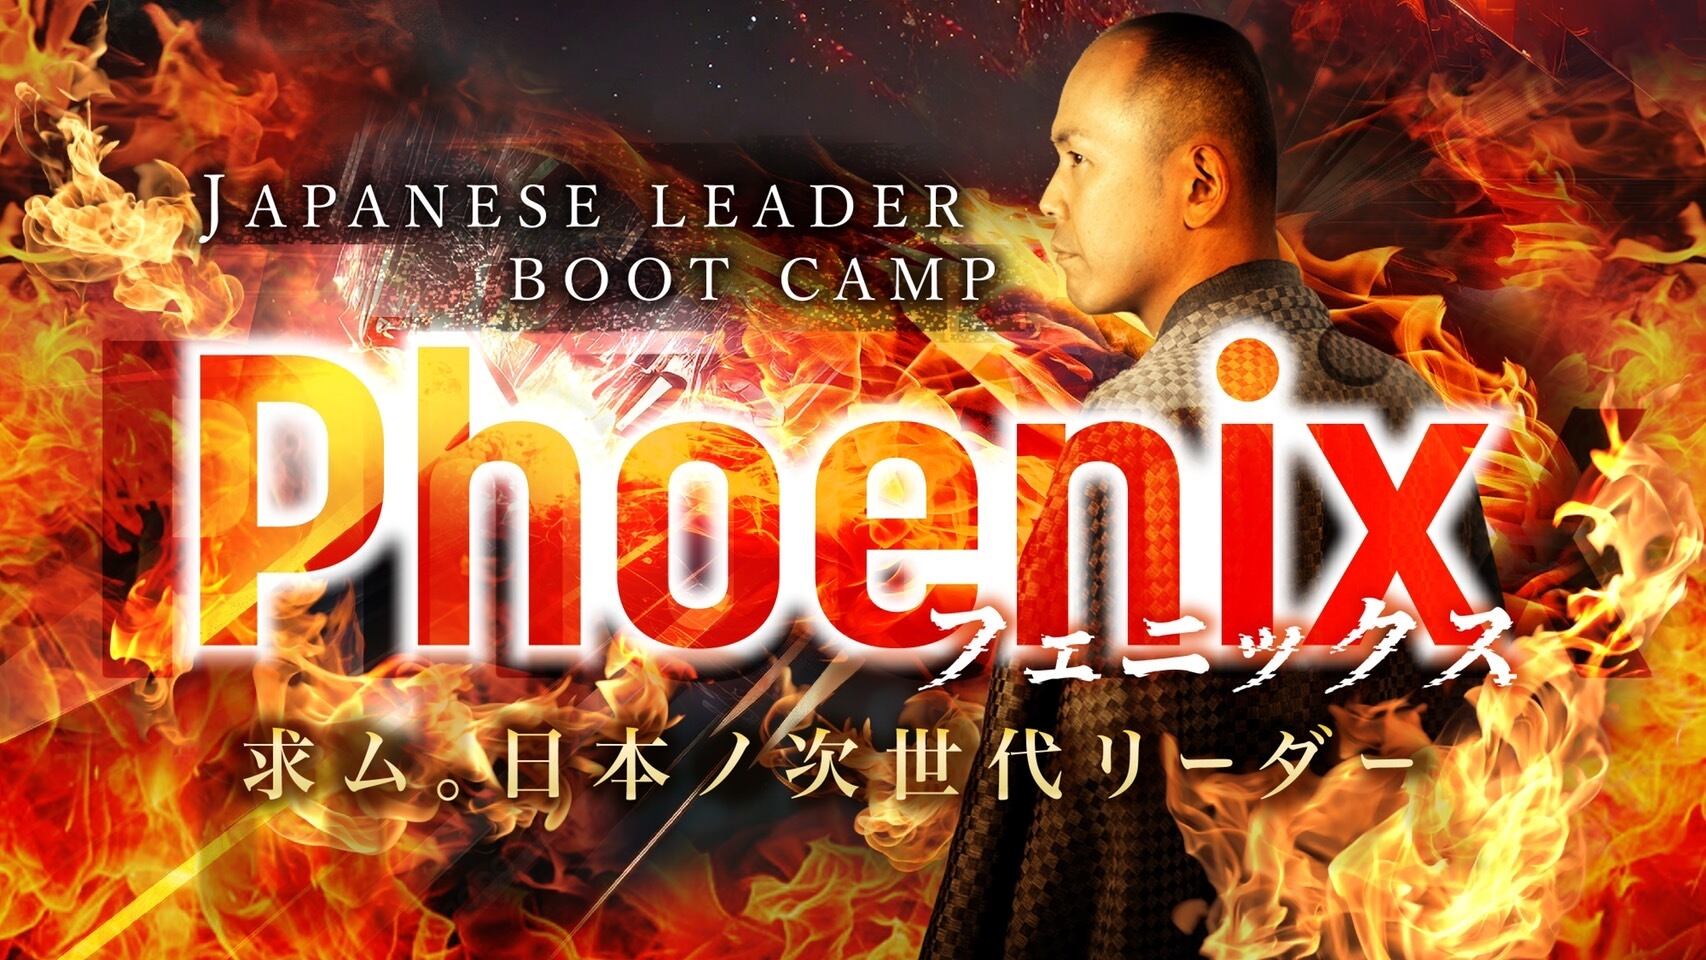 JAPANESE LEADER BOOT CAMP 《Phoenix》アシスタント参加